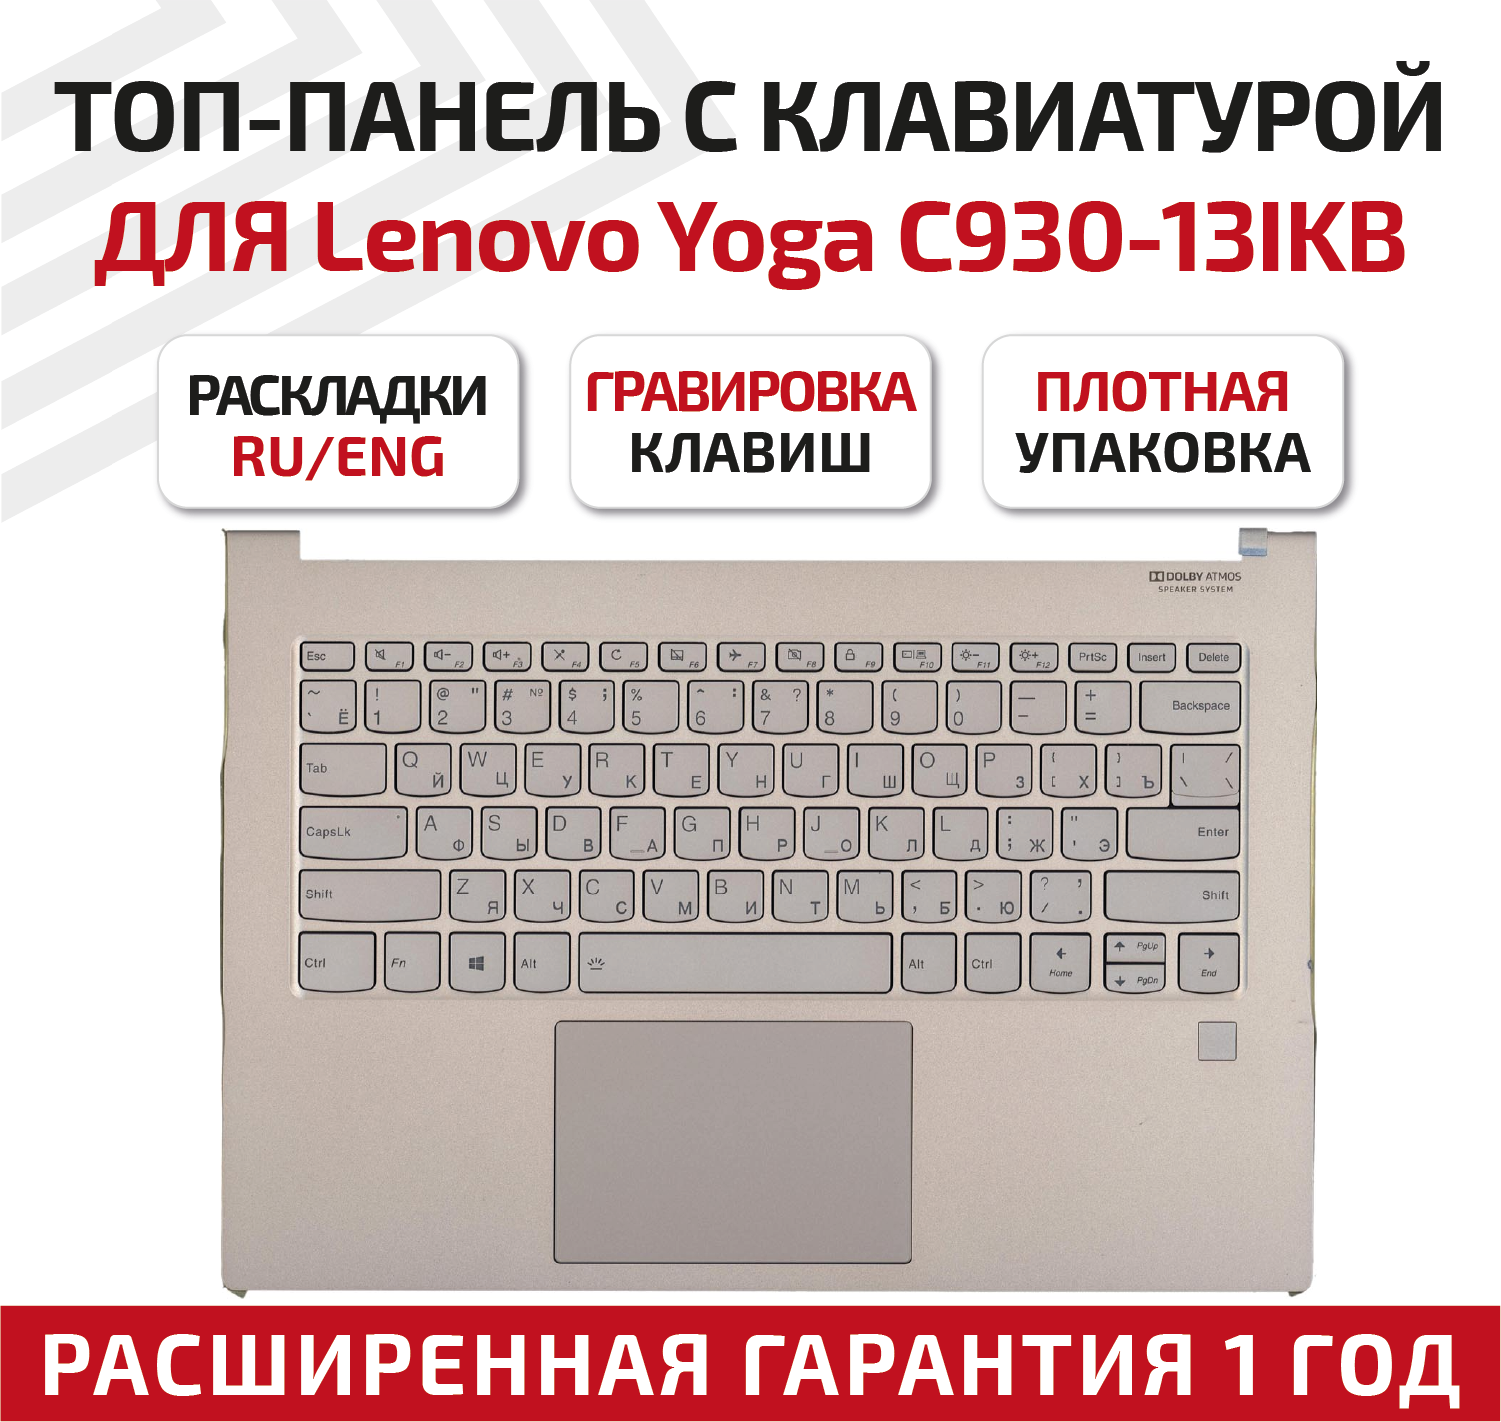 Клавиатура (keyboard) 5CB0S72649 для ноутбука Lenovo Yoga C930-13IKB, топкейс, серебристый